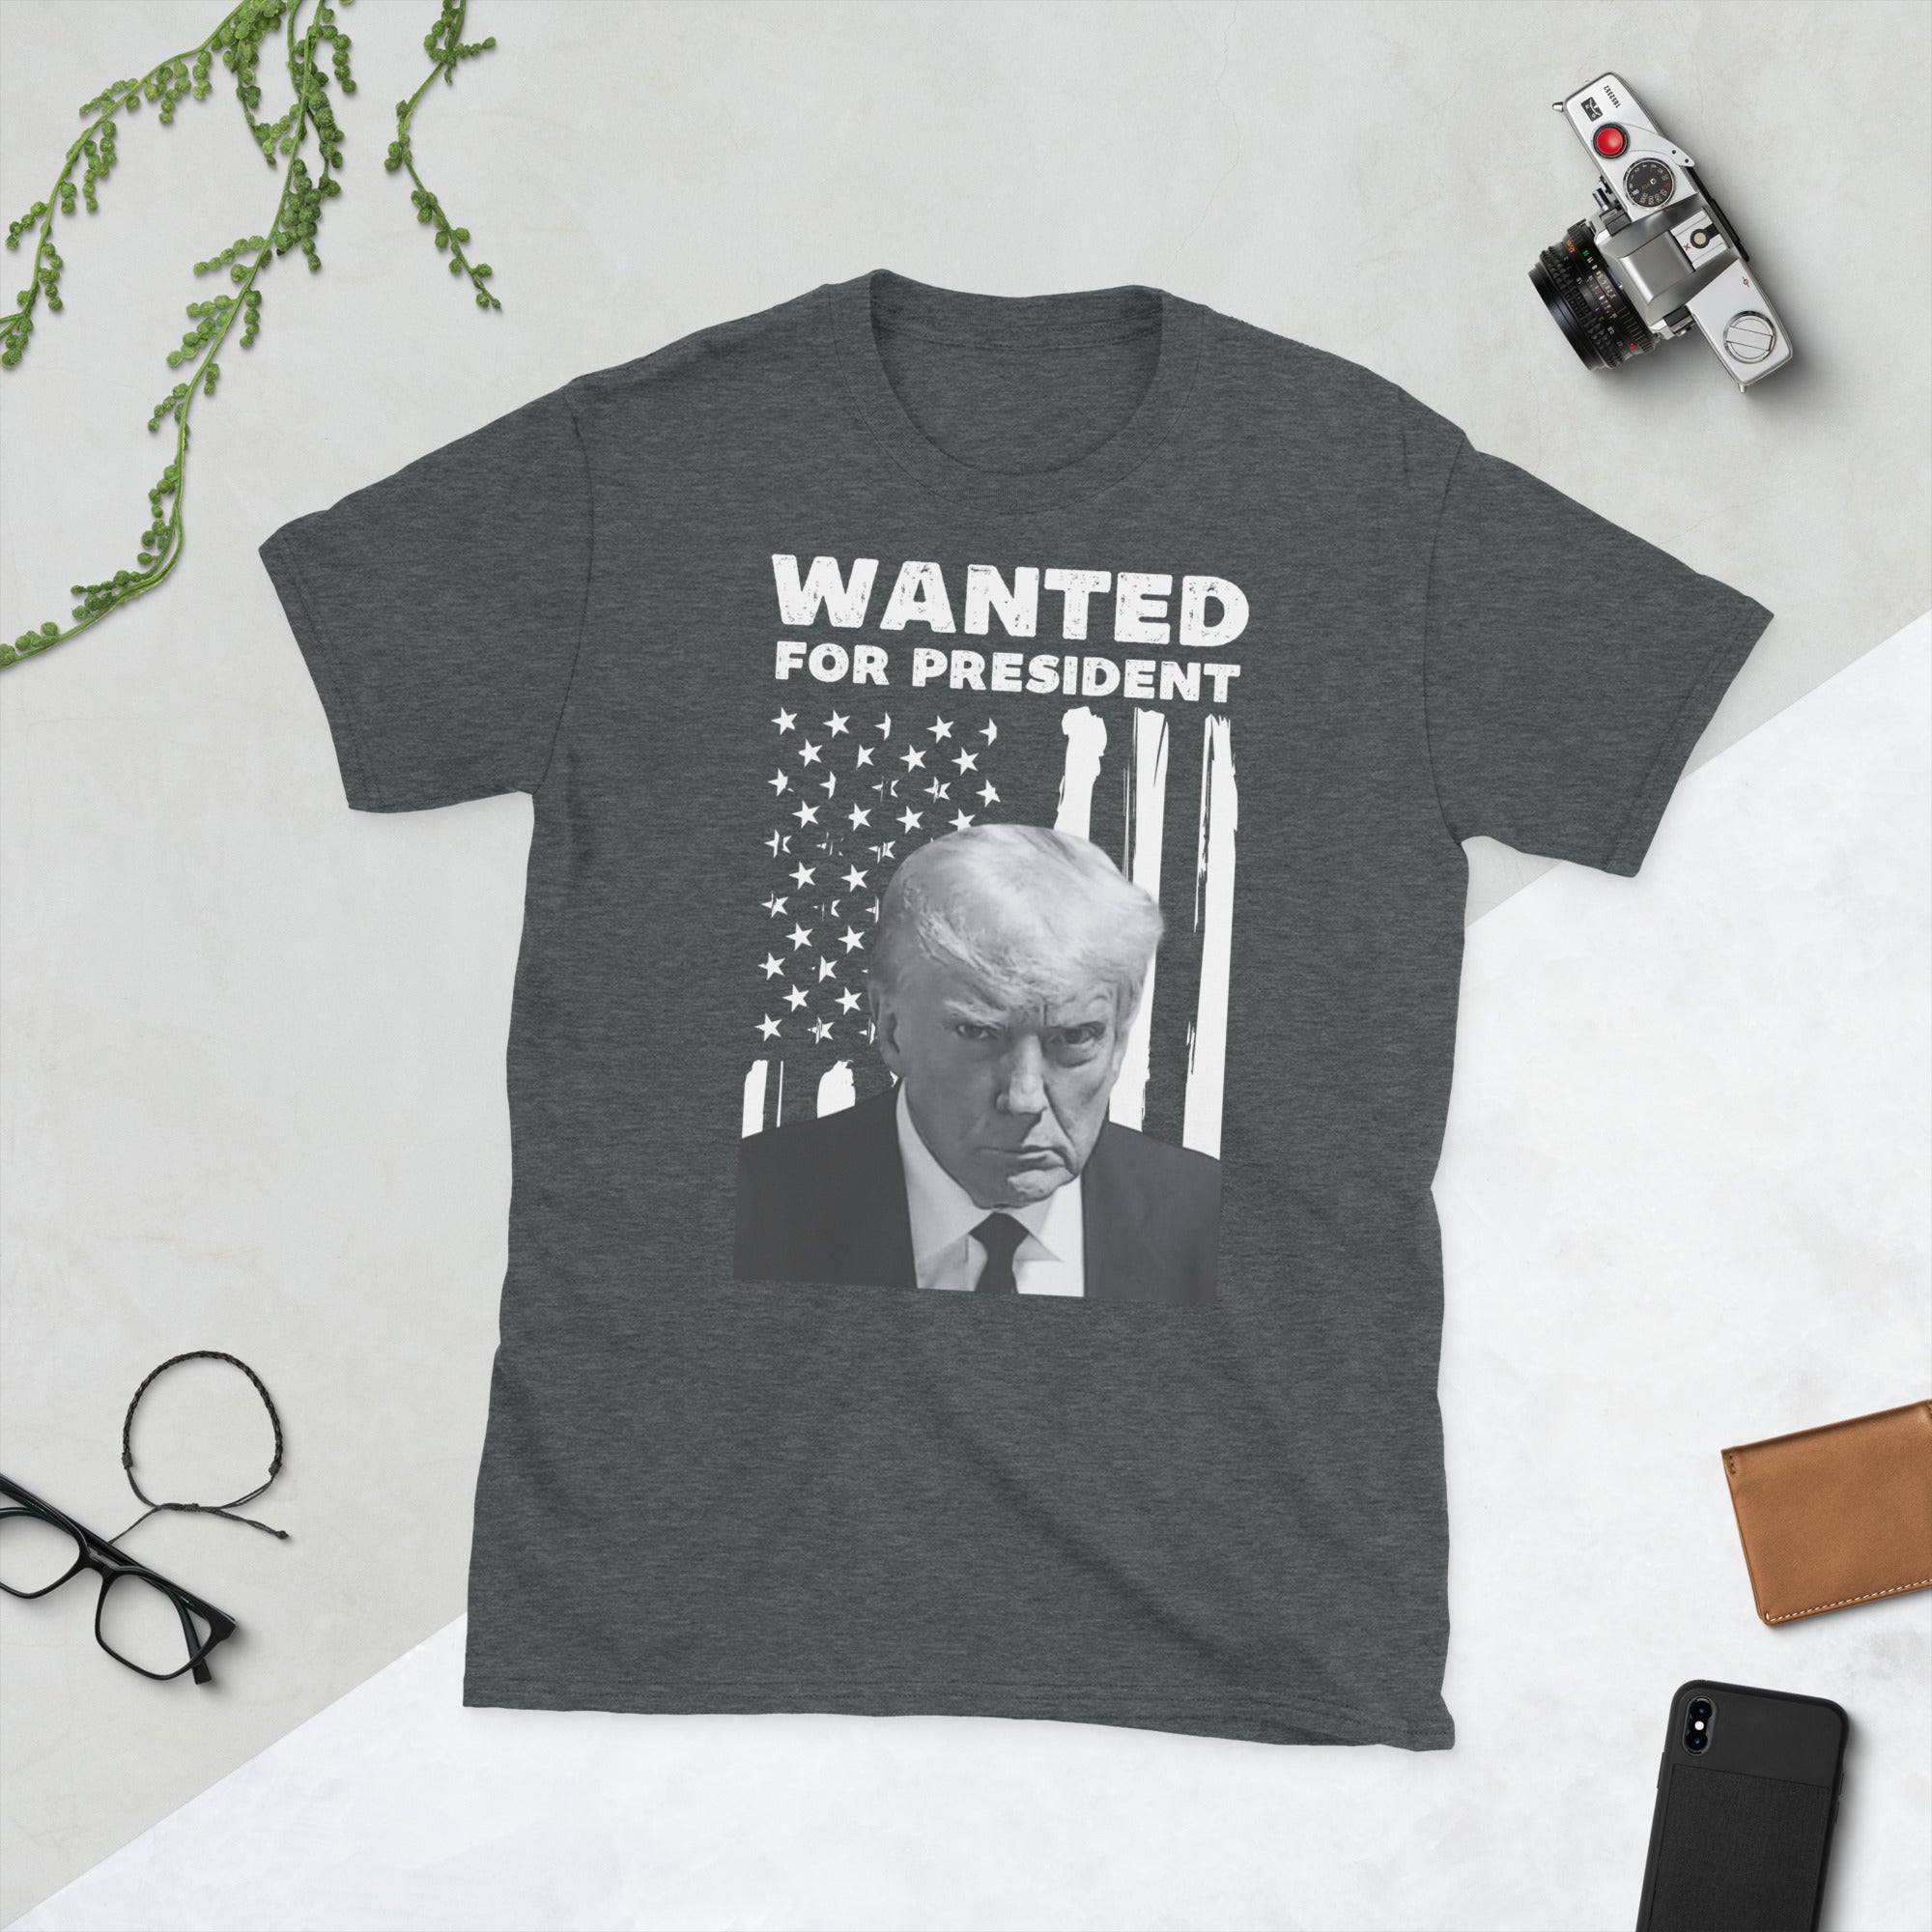 Wanted For President, Trump 2024 Shirt, Republican Gift, Funny Trump Tee, White House Trump 2024 Shirt, Political TShirt, Election Shirts